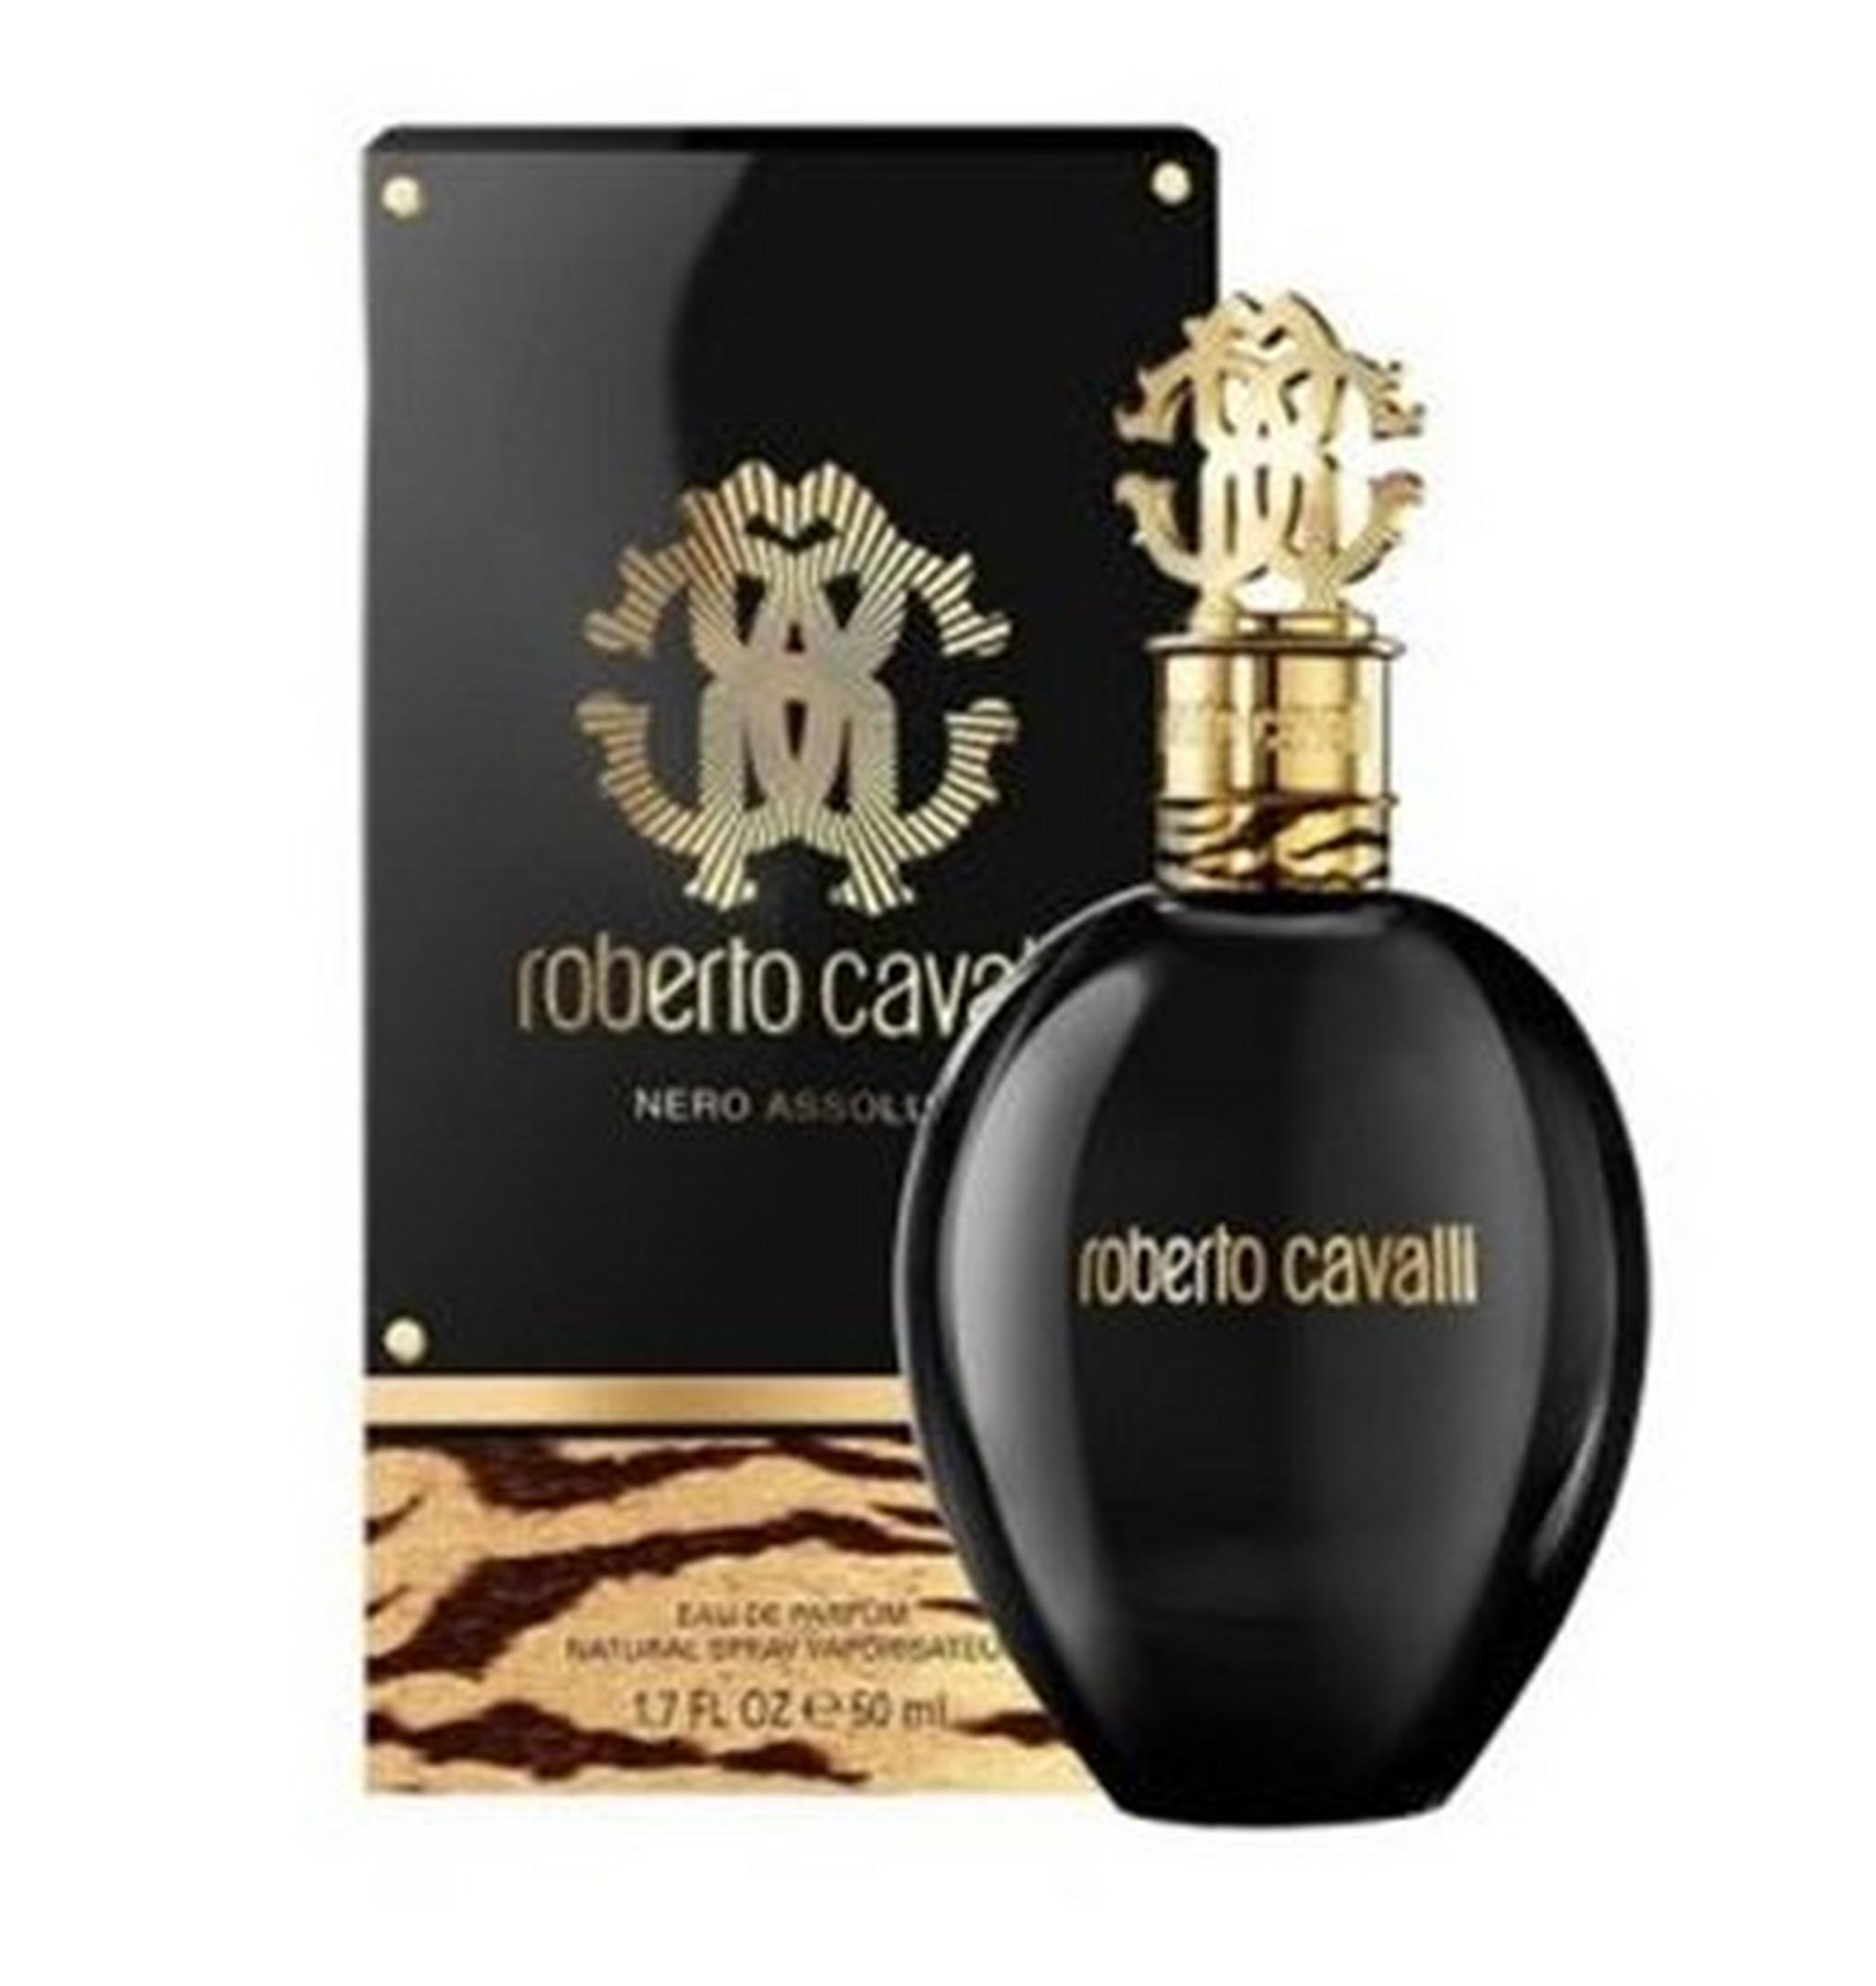 Roberto Cavalli Nero Assoluto Perfume for Women Eau de Parfum 50ml